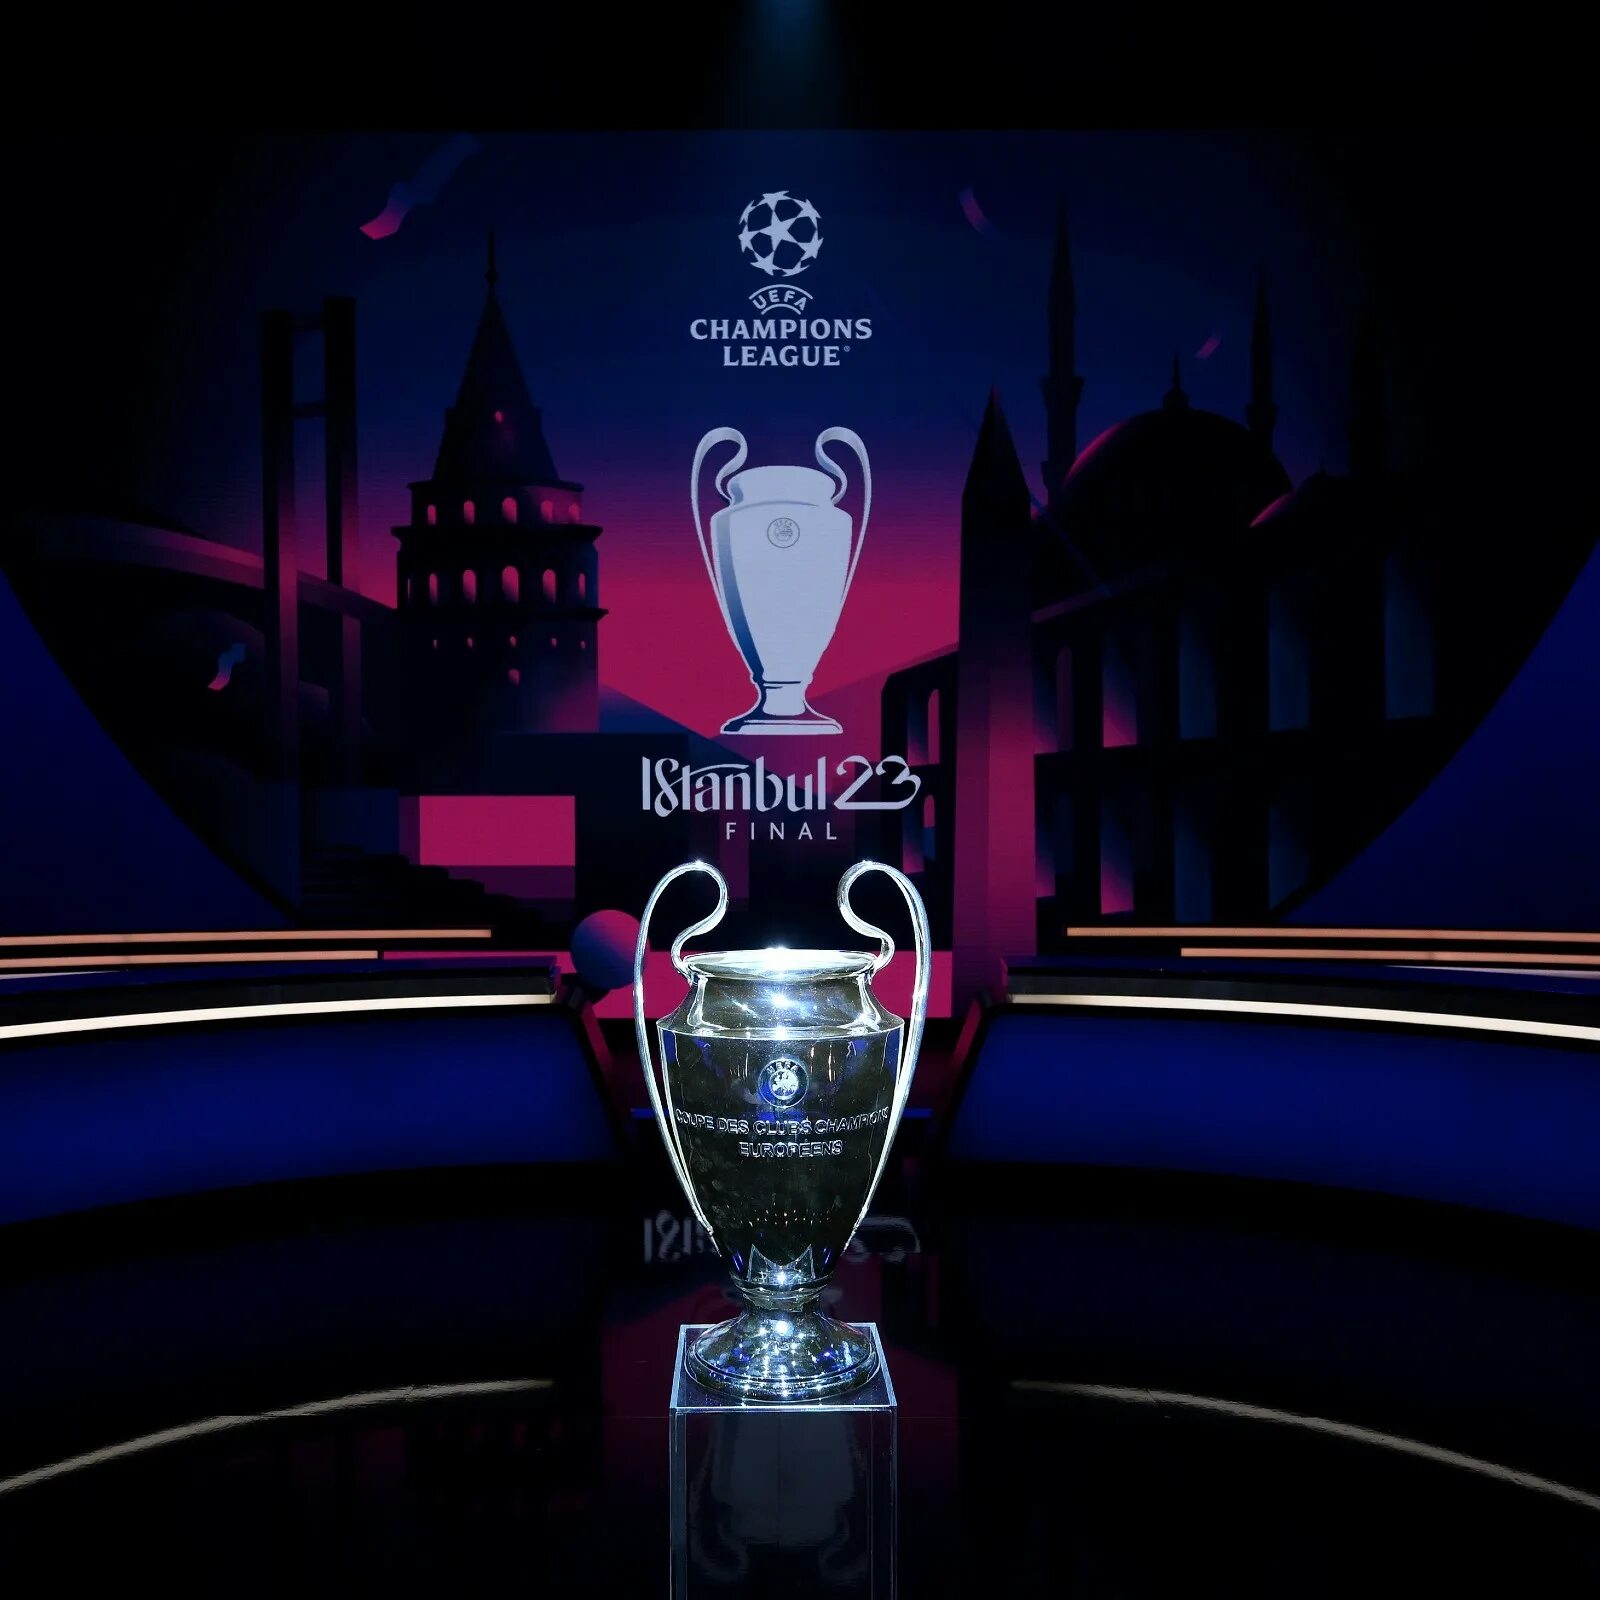 Champion league table. Champions League 2022 Final. UEFA Champions League 2022/23. ЛЧ 2022 2023 финал. Лига чемпионов финал финал 2023.